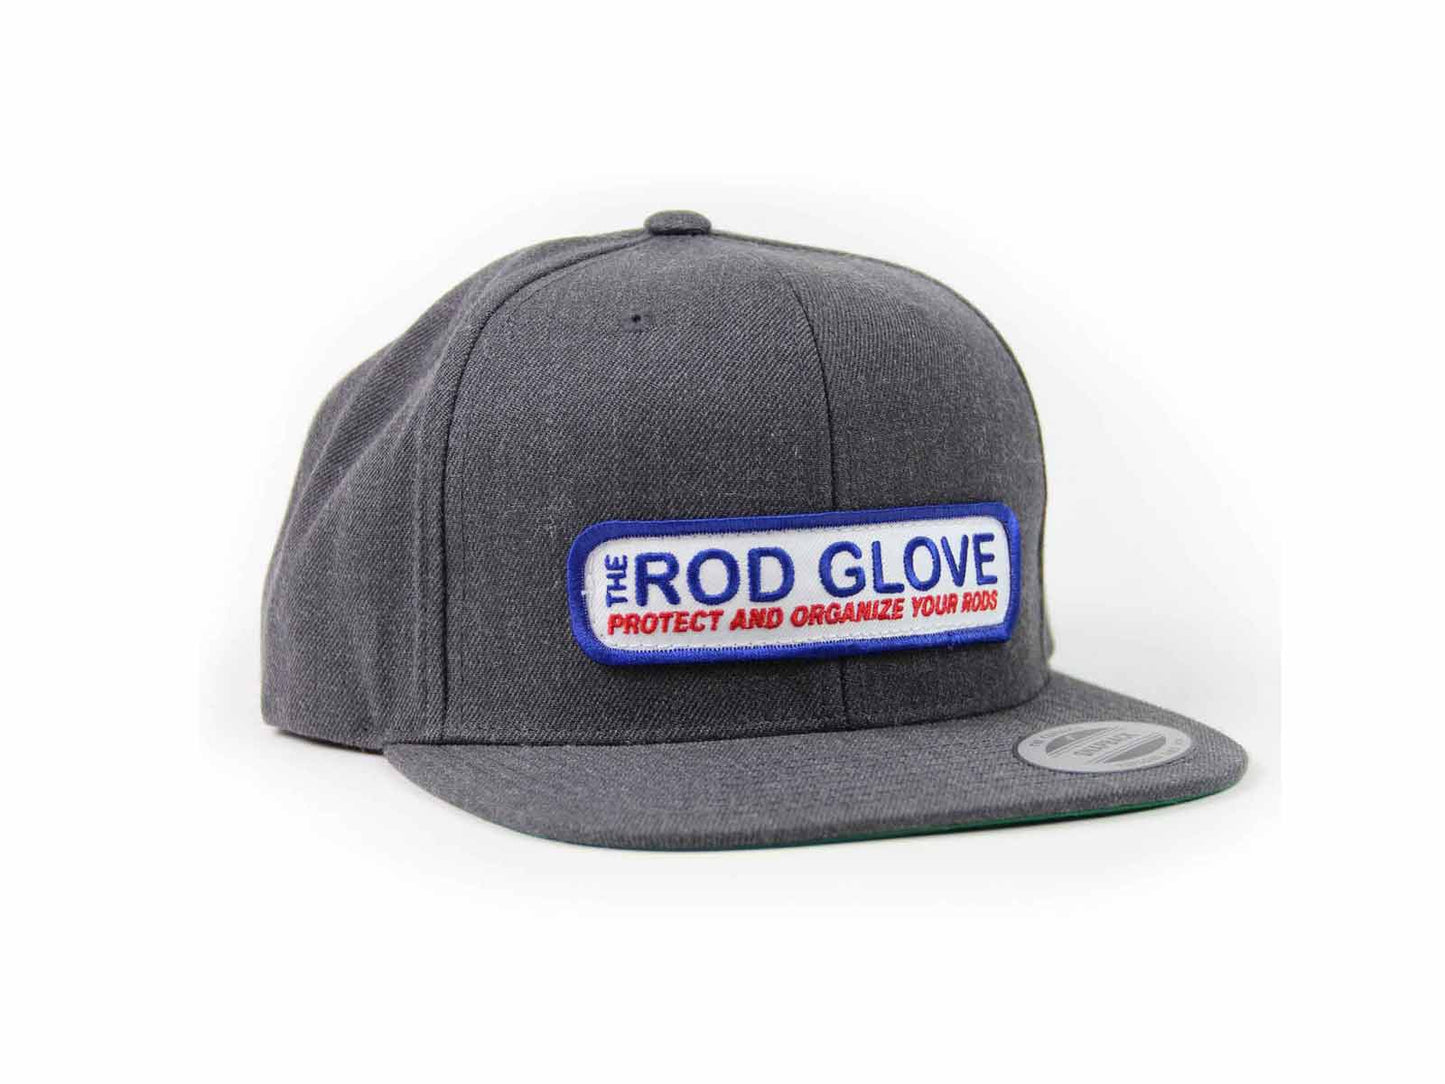 Rod Glove Branded Flat Brim, Snap Back Hat